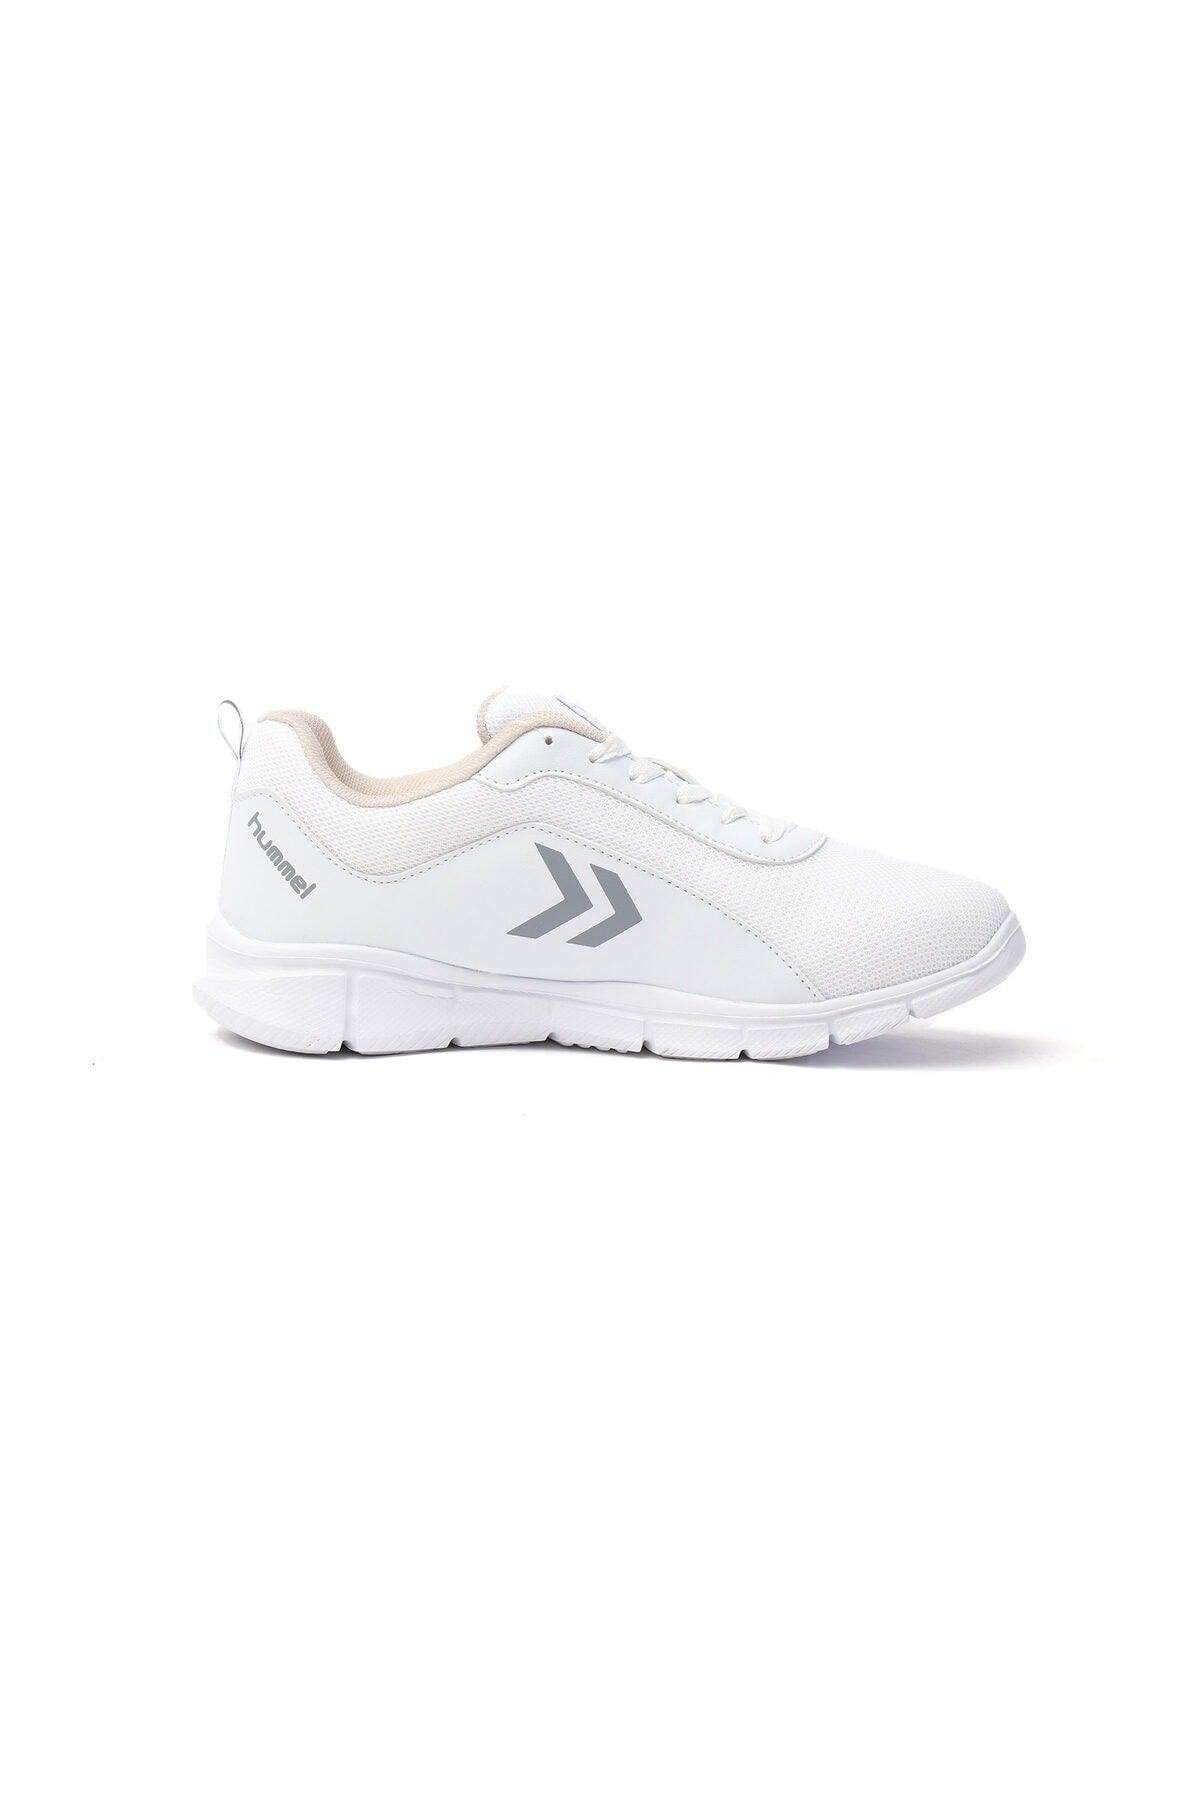 Ismir - Unisex White Sneakers - Swordslife